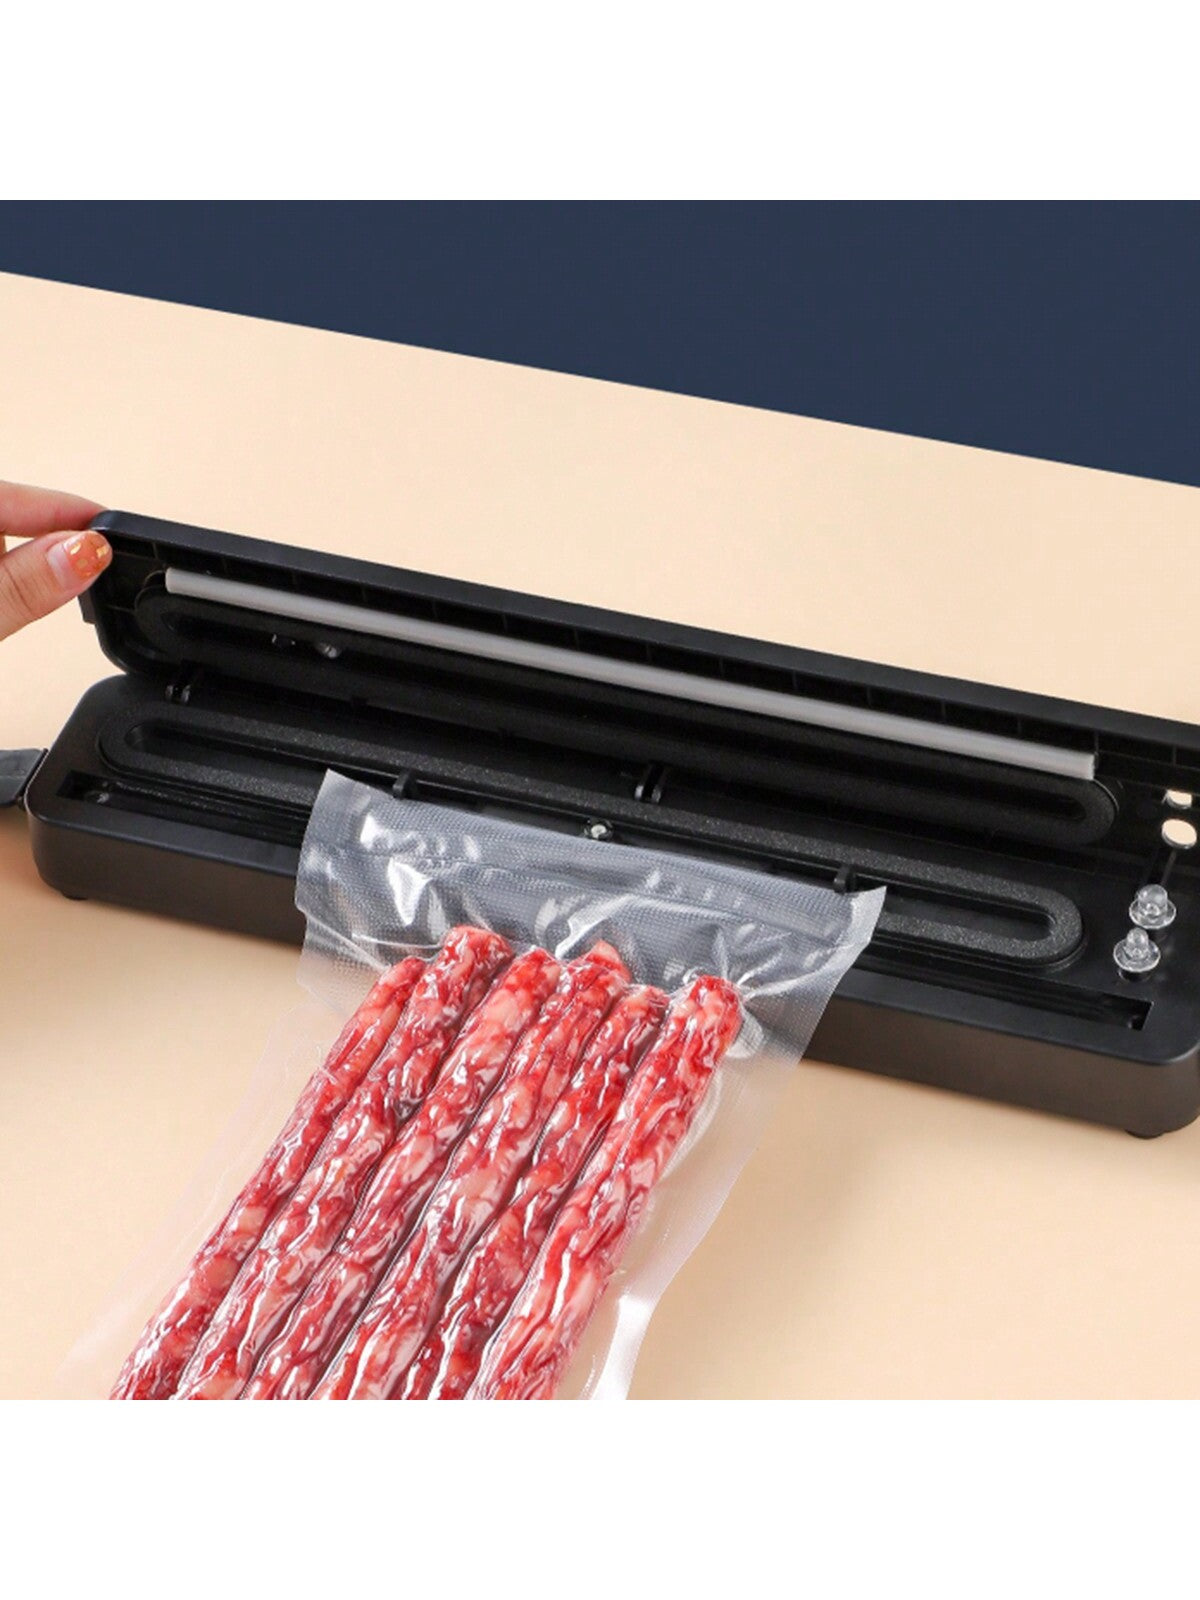 Mini Household Vacuum Sealer Machine For Food Packaging, Fully Automatic Wet & Dry Dual-purpose Sealing Equipment-Black-5